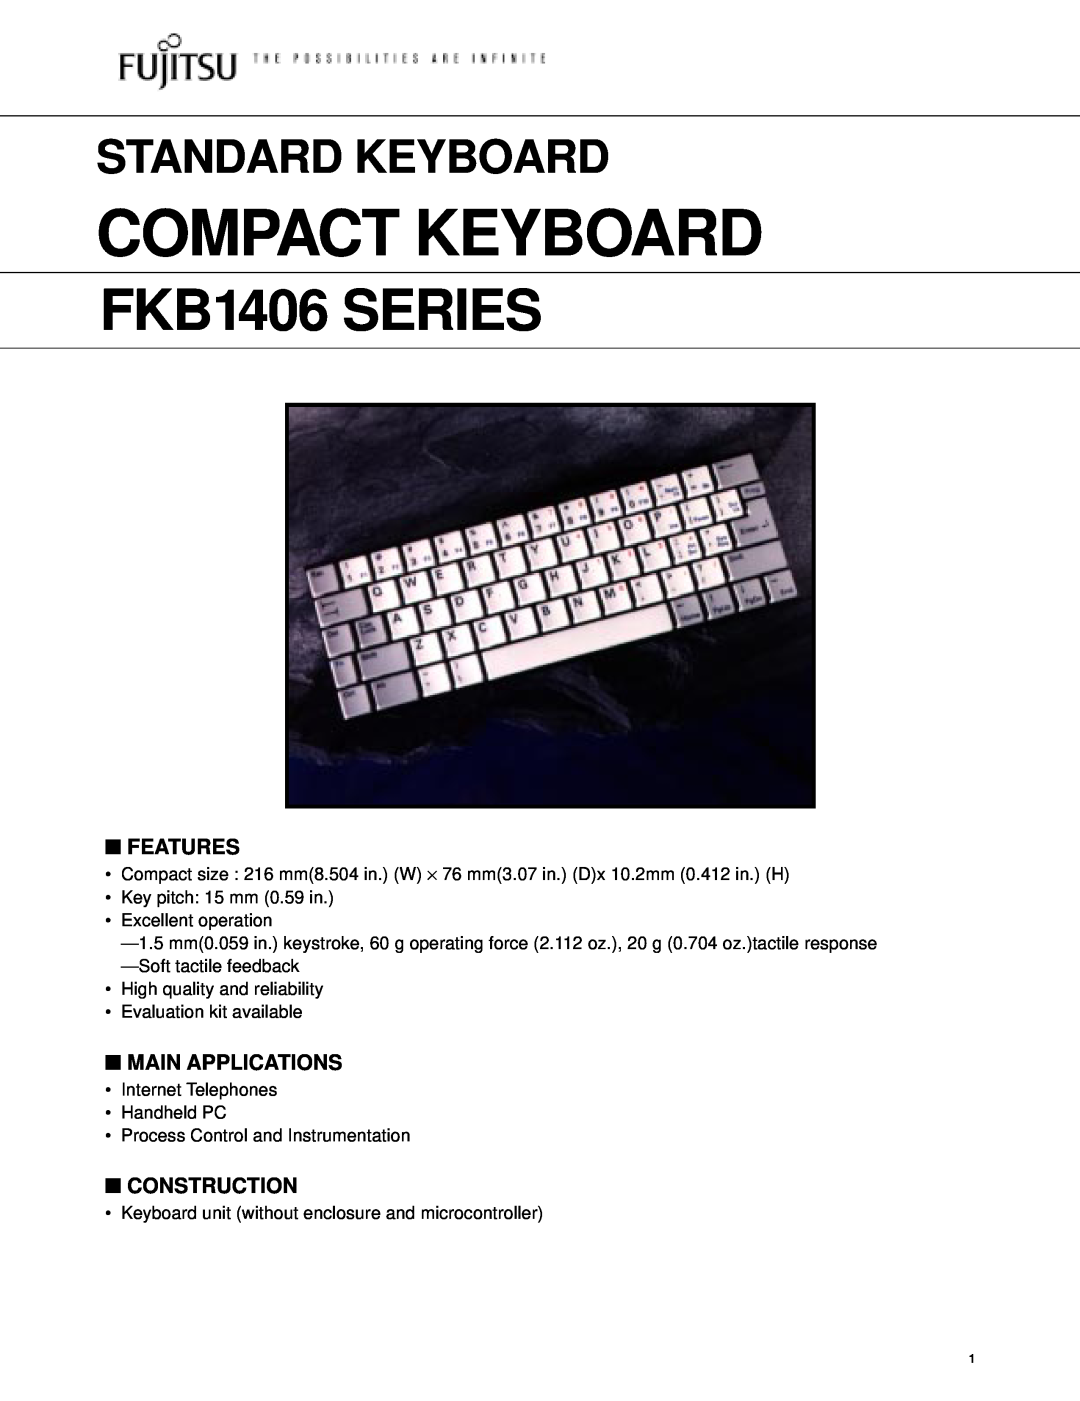 Fujitsu FKB1406 Series manual Features, Main Applications, Construction, Compact Keyboard, FKB1406 SERIES 